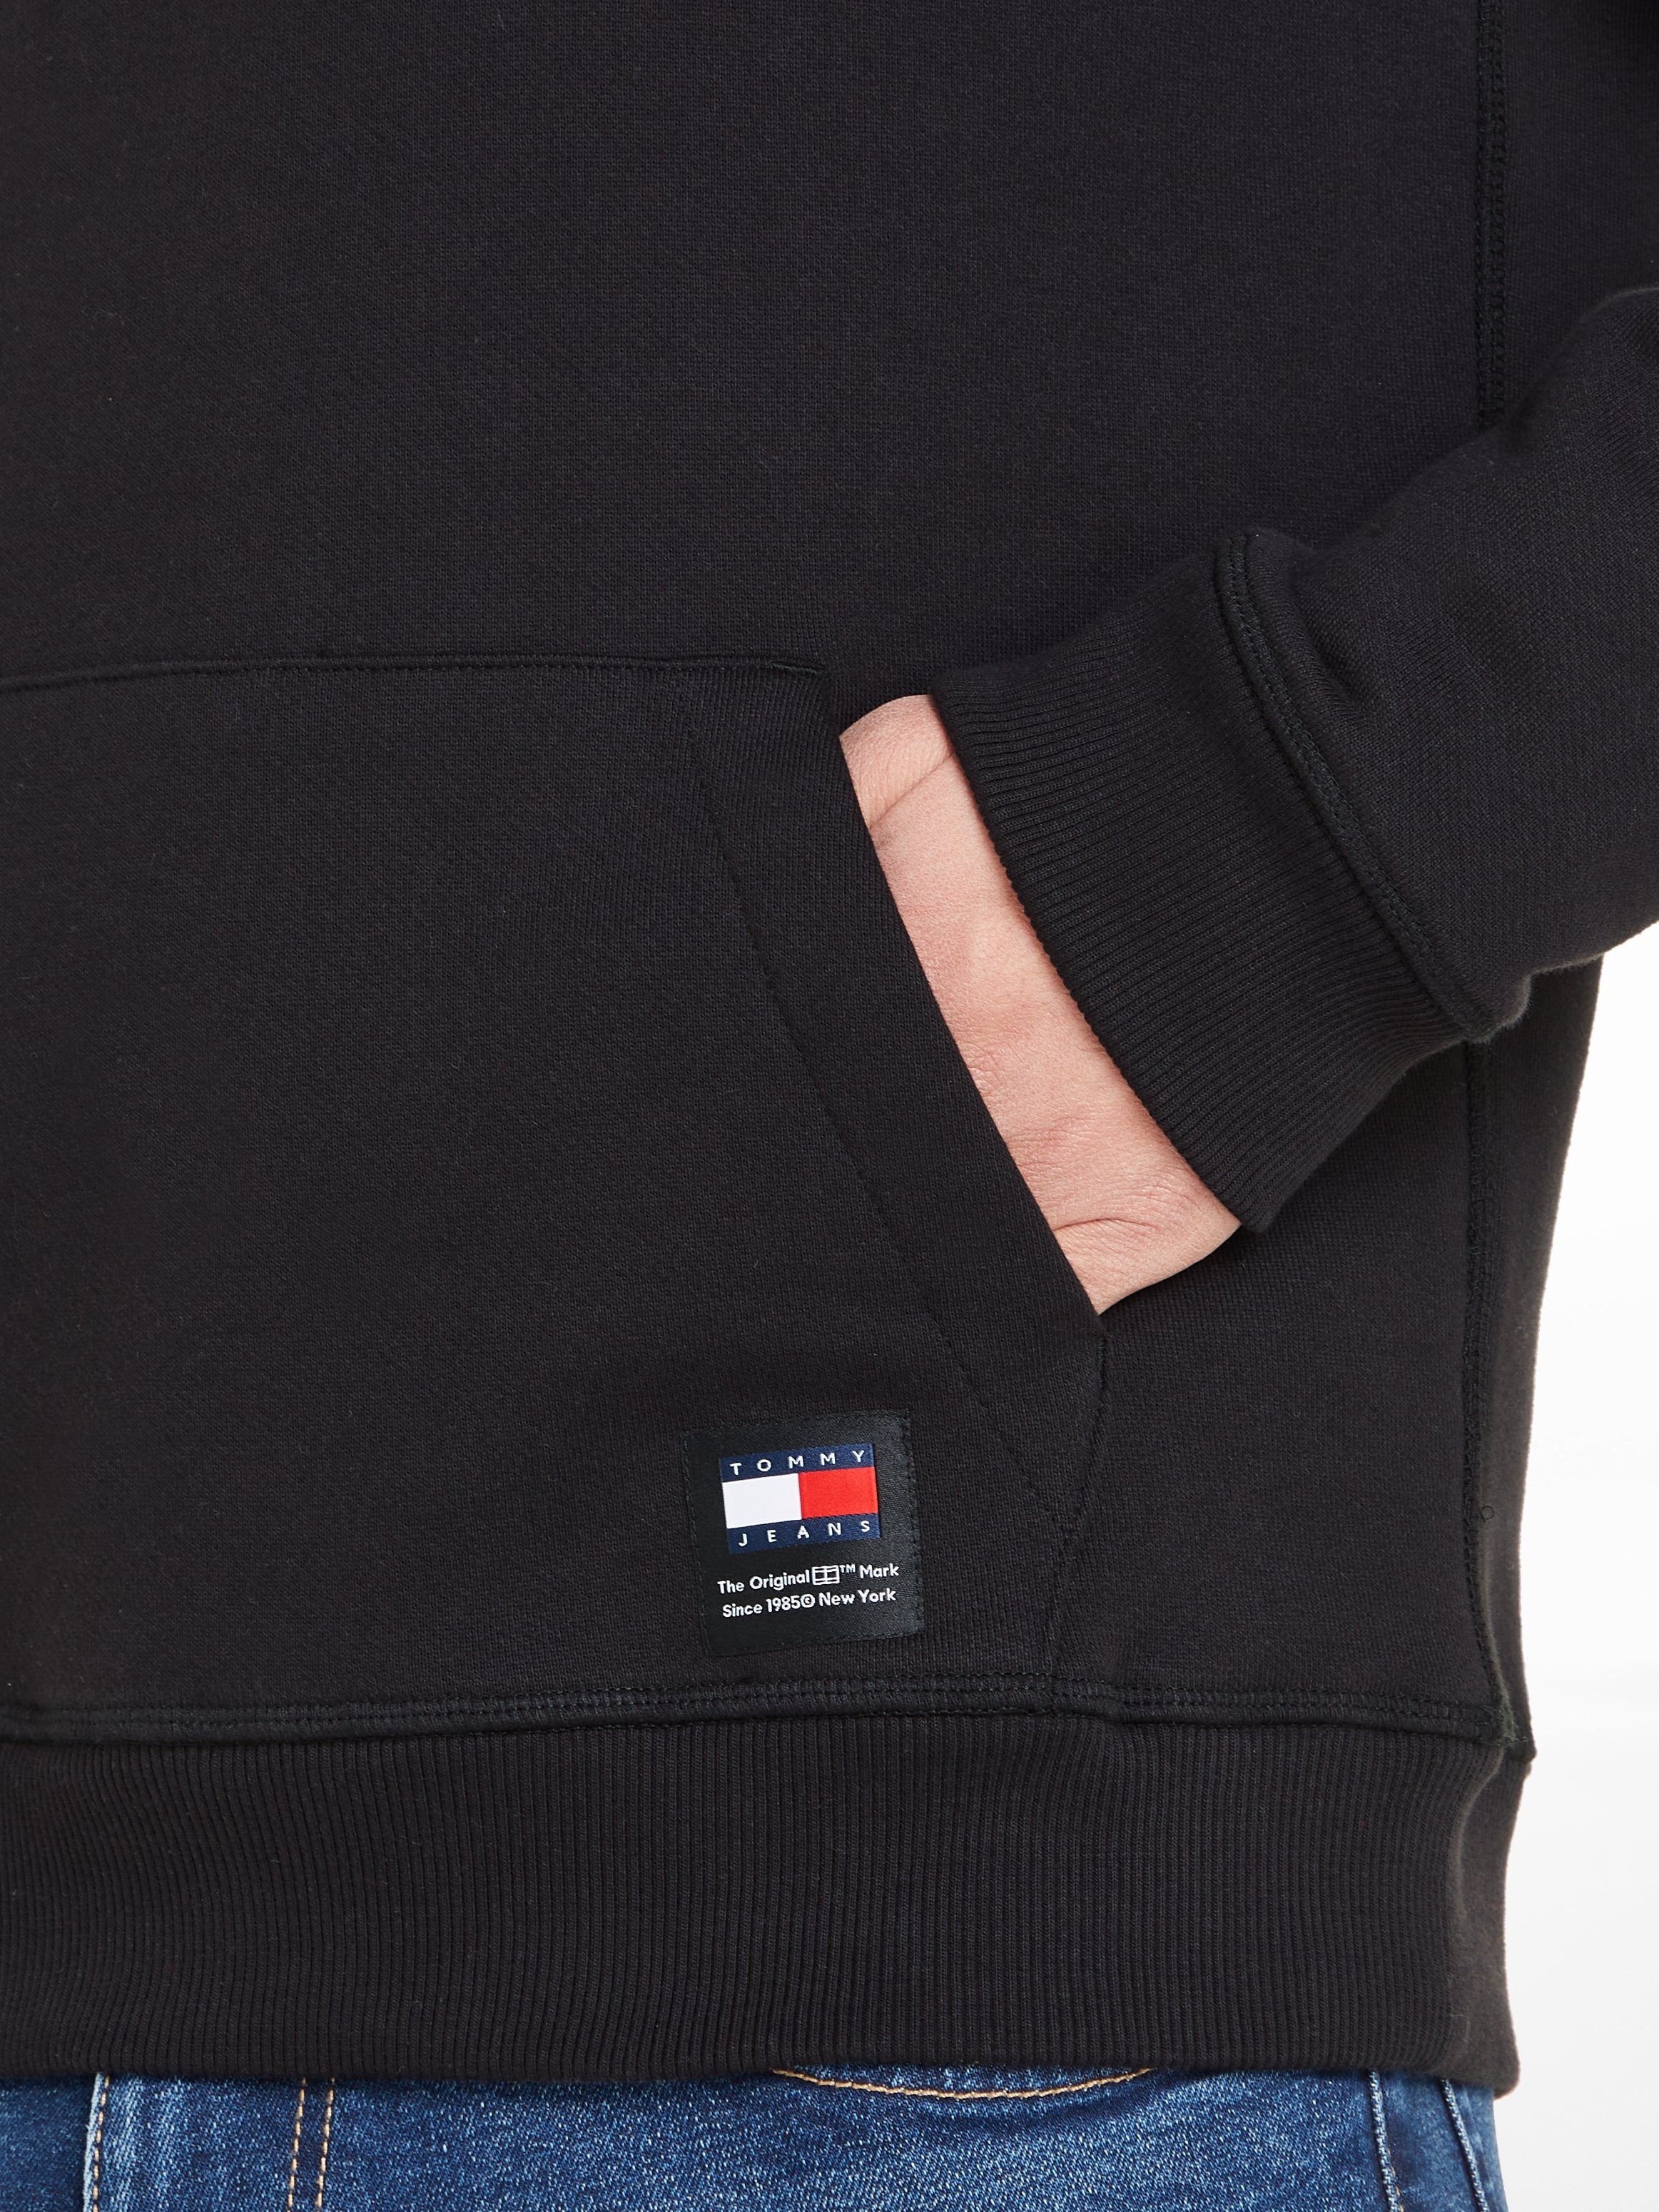 REG HOODIE Logodruck Brust auf der TJM Kapuzensweatshirt CLASSICS EXT Tommy Black BOLD Jeans mit